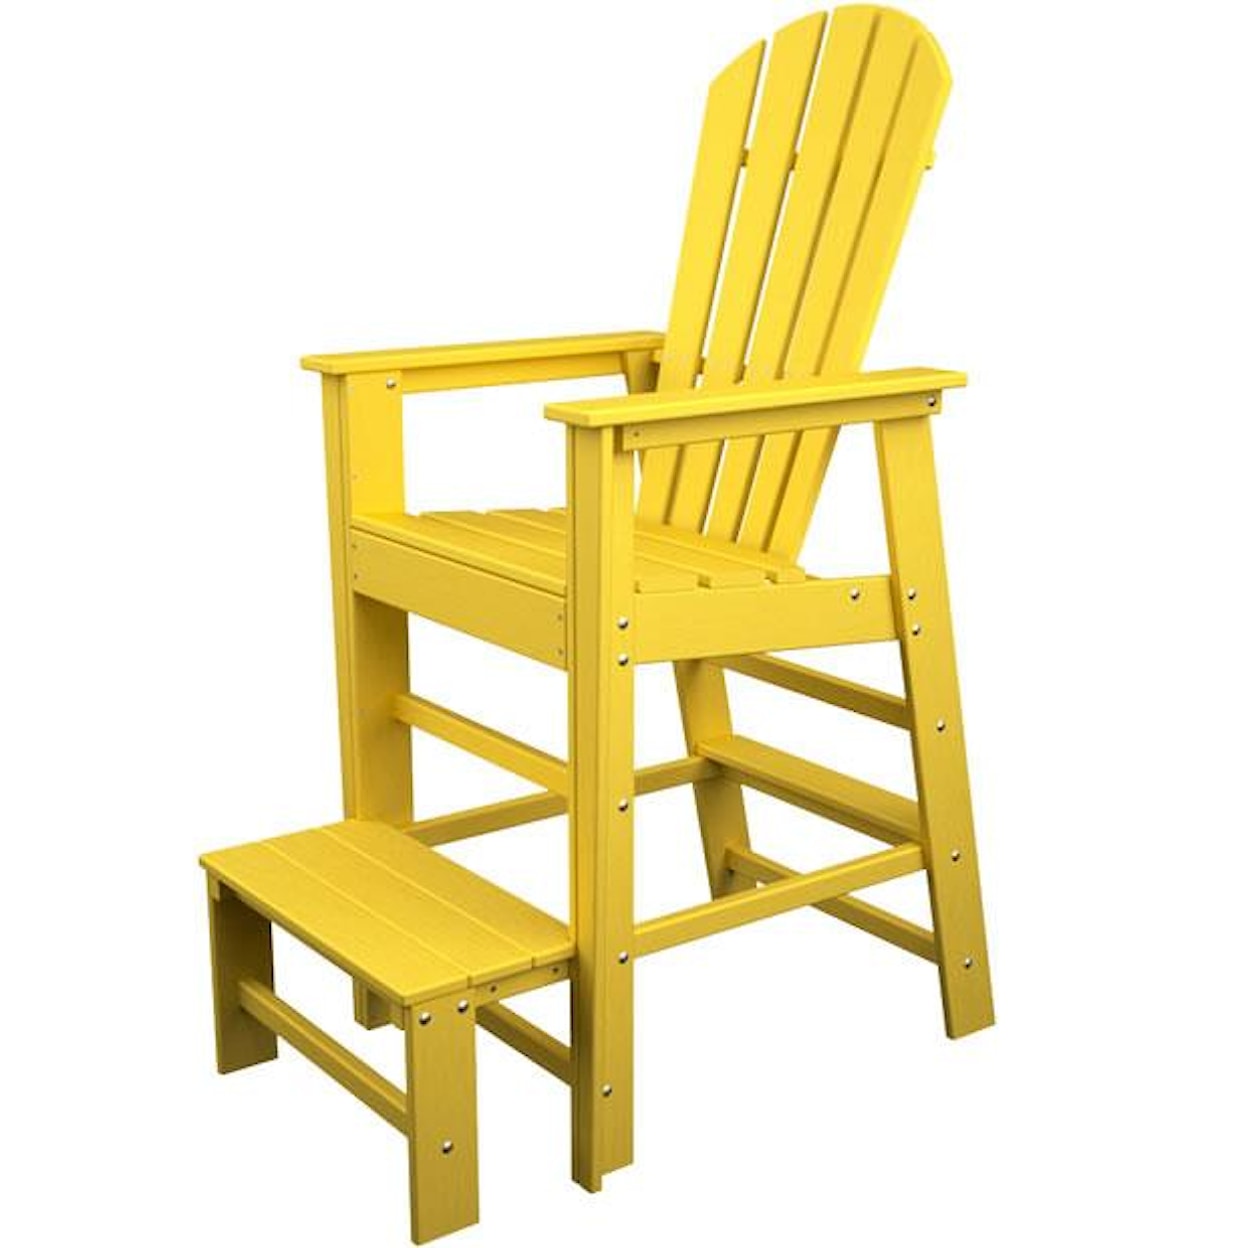 Polywood South Beach Lifeguard Chair